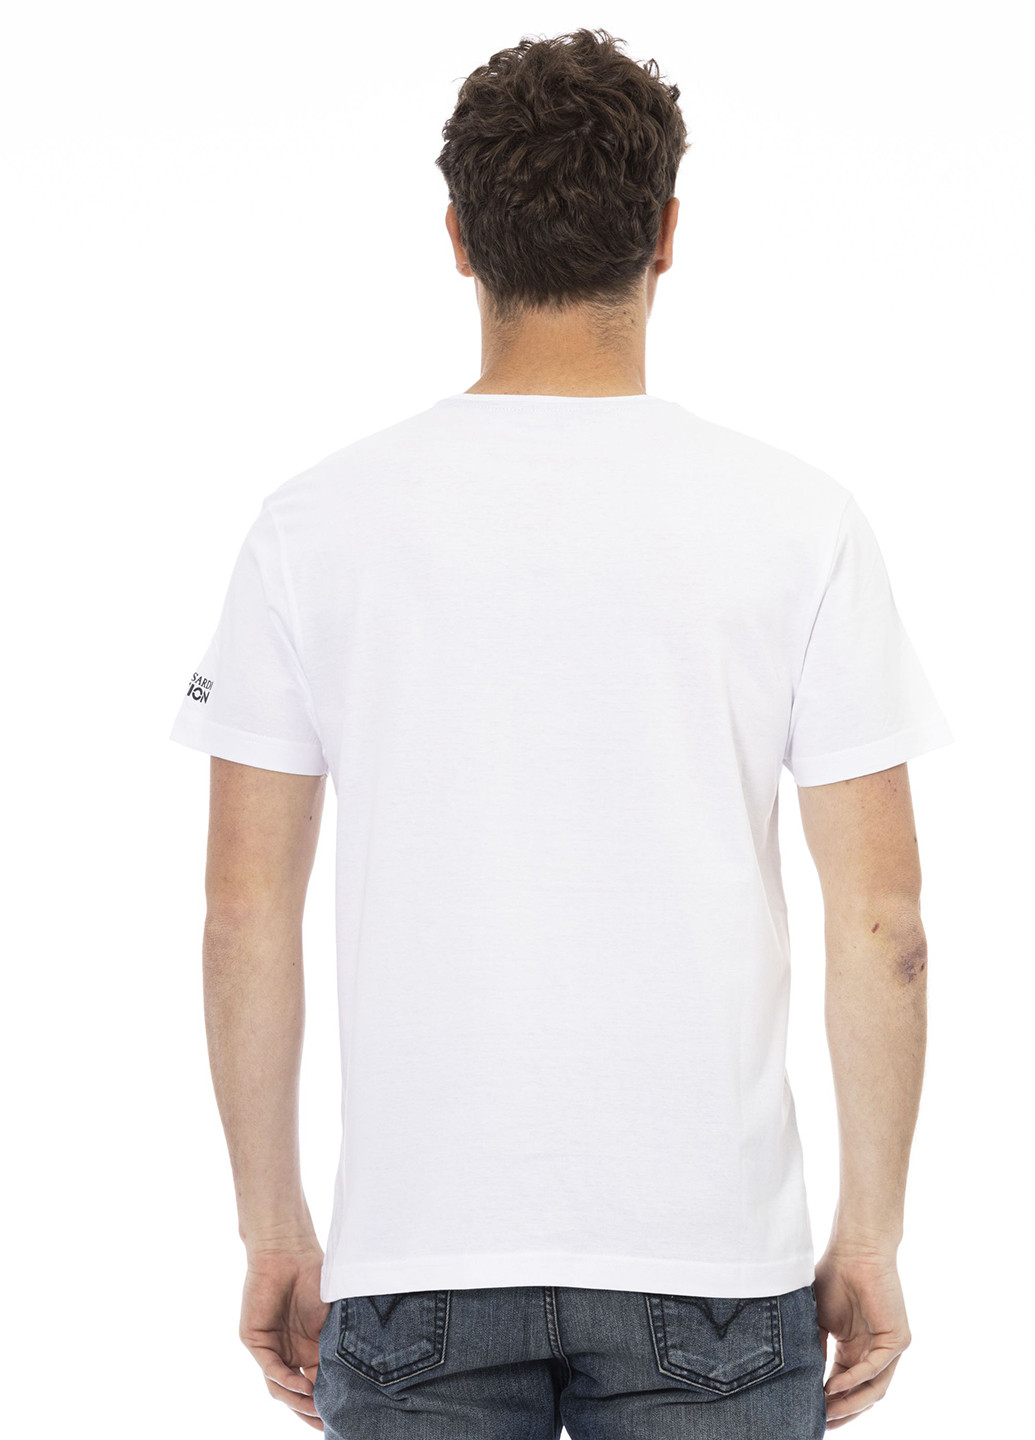 Белая футболка Trussardi